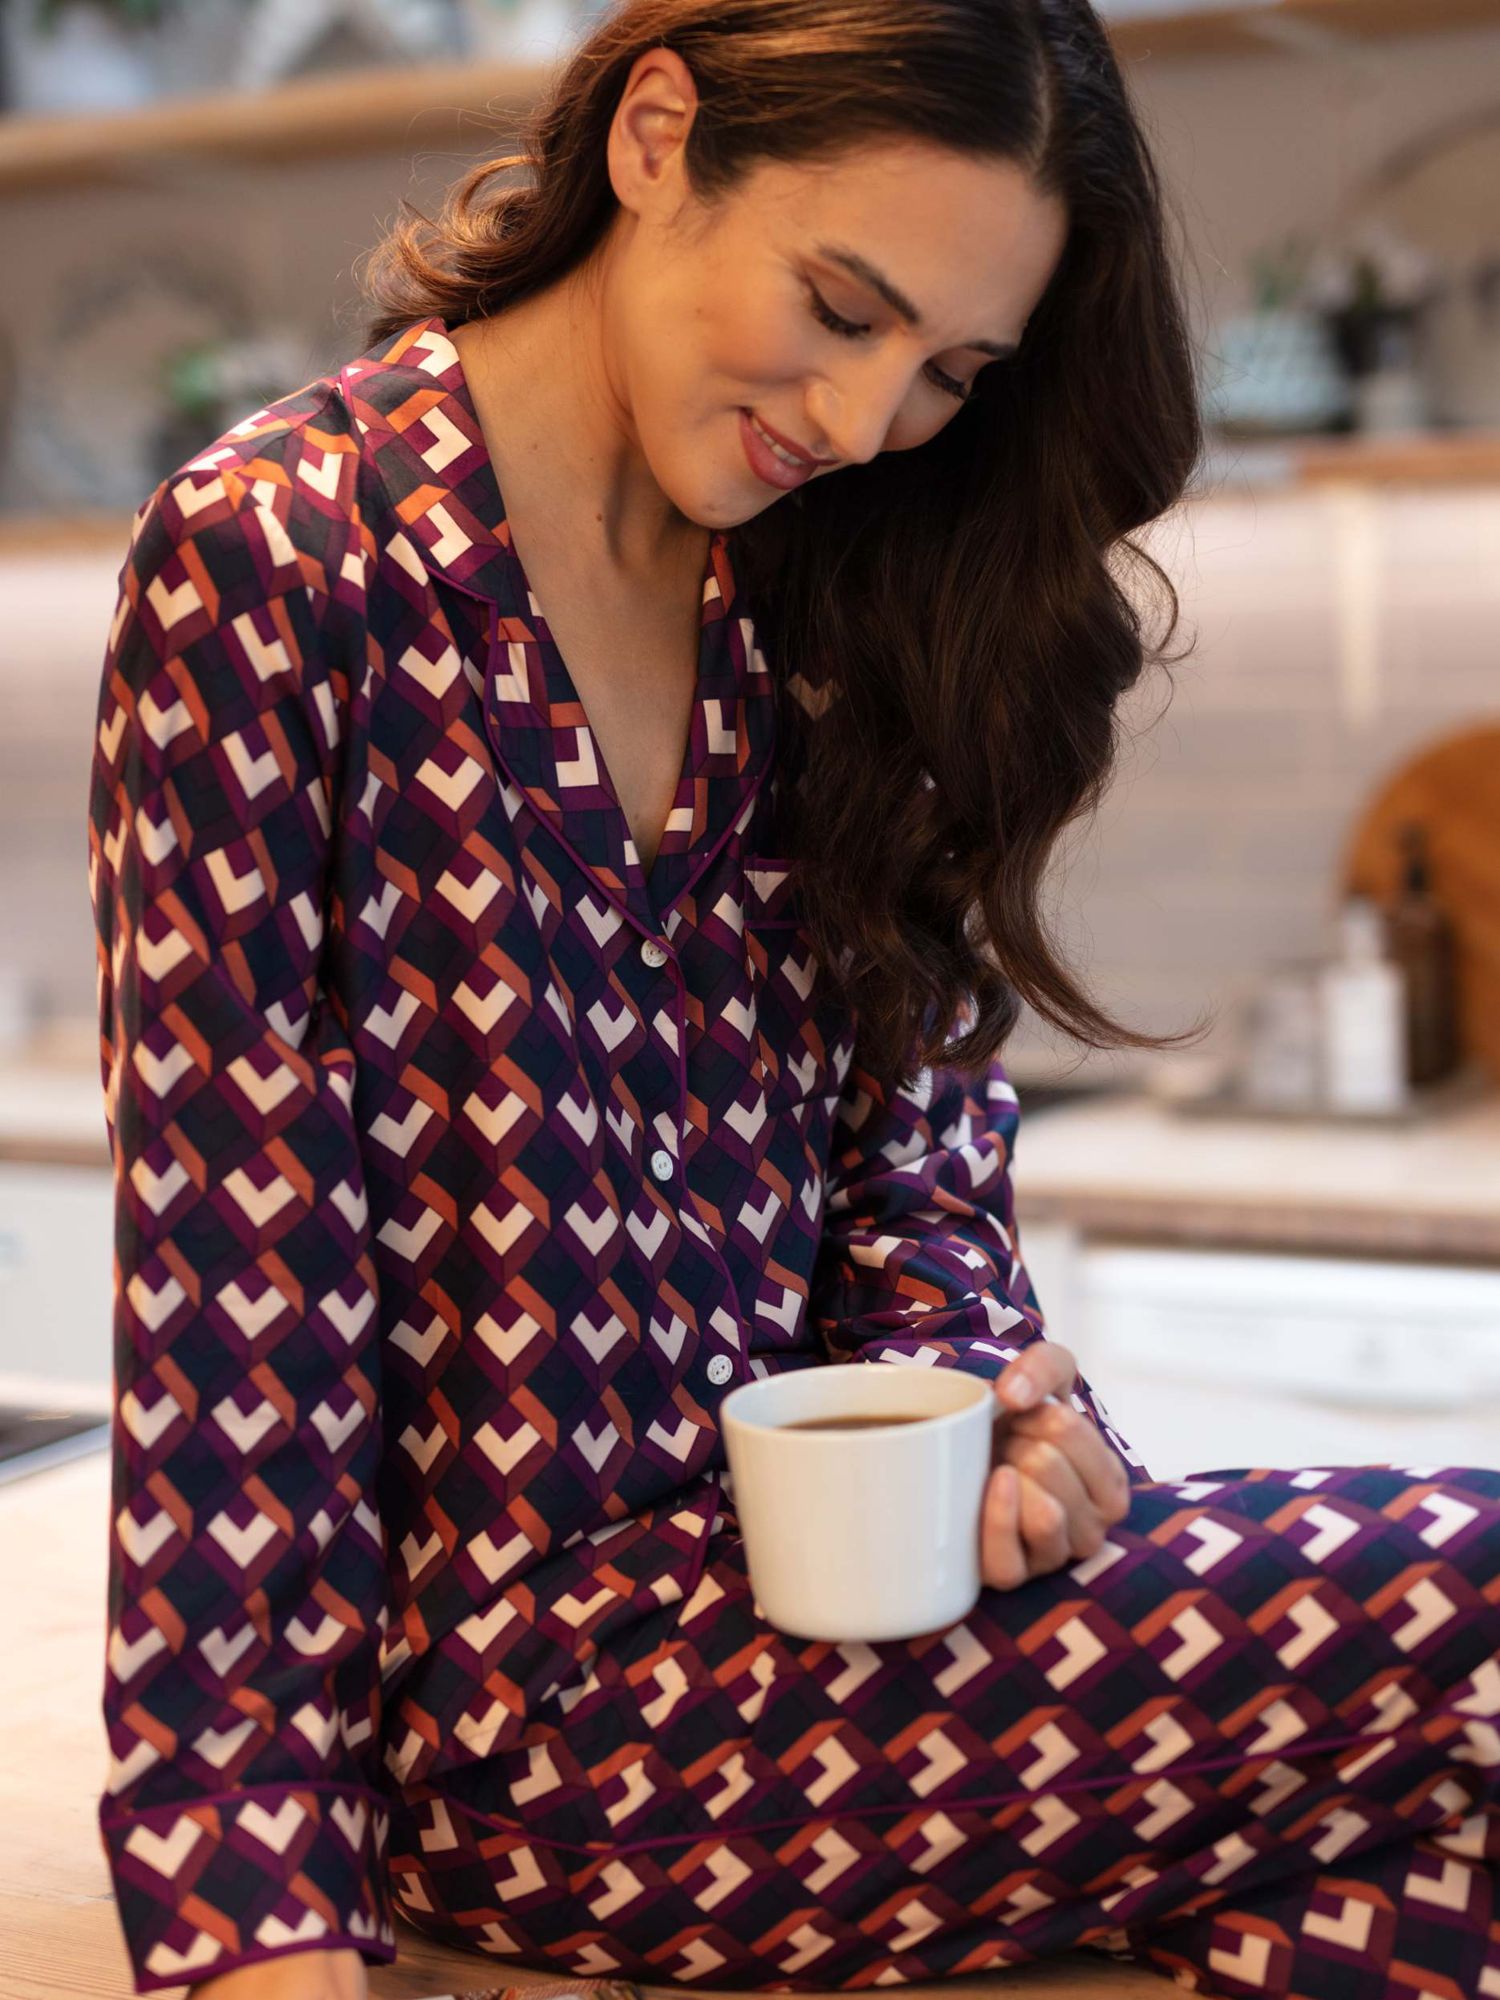 Buy Fable & Eve Southbank Geo Print Long Sleeve Pyjama Set, Navy Online at johnlewis.com